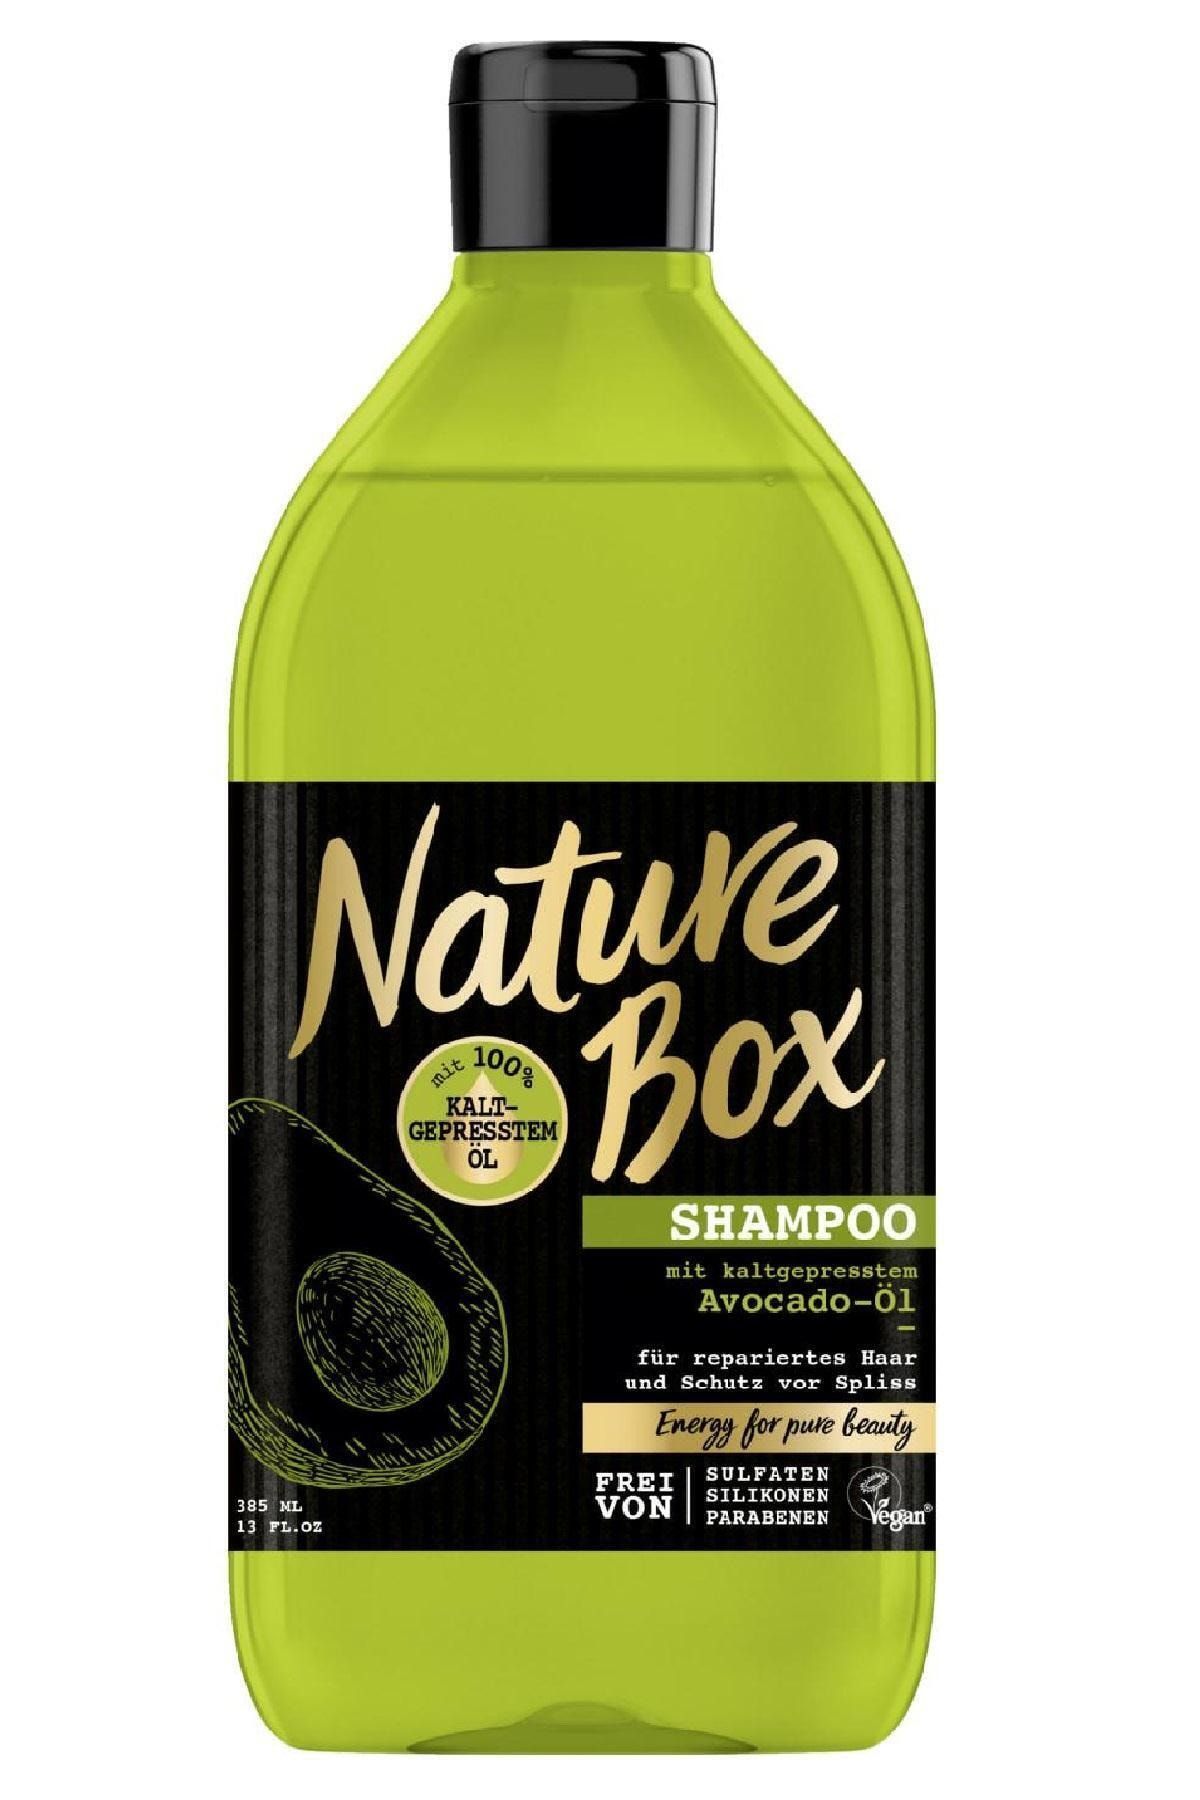 Natural box. Nature Box шампуни. Nature Box. Шампунь авокадо натуре бокс. Nature Box шампунь отзывы.